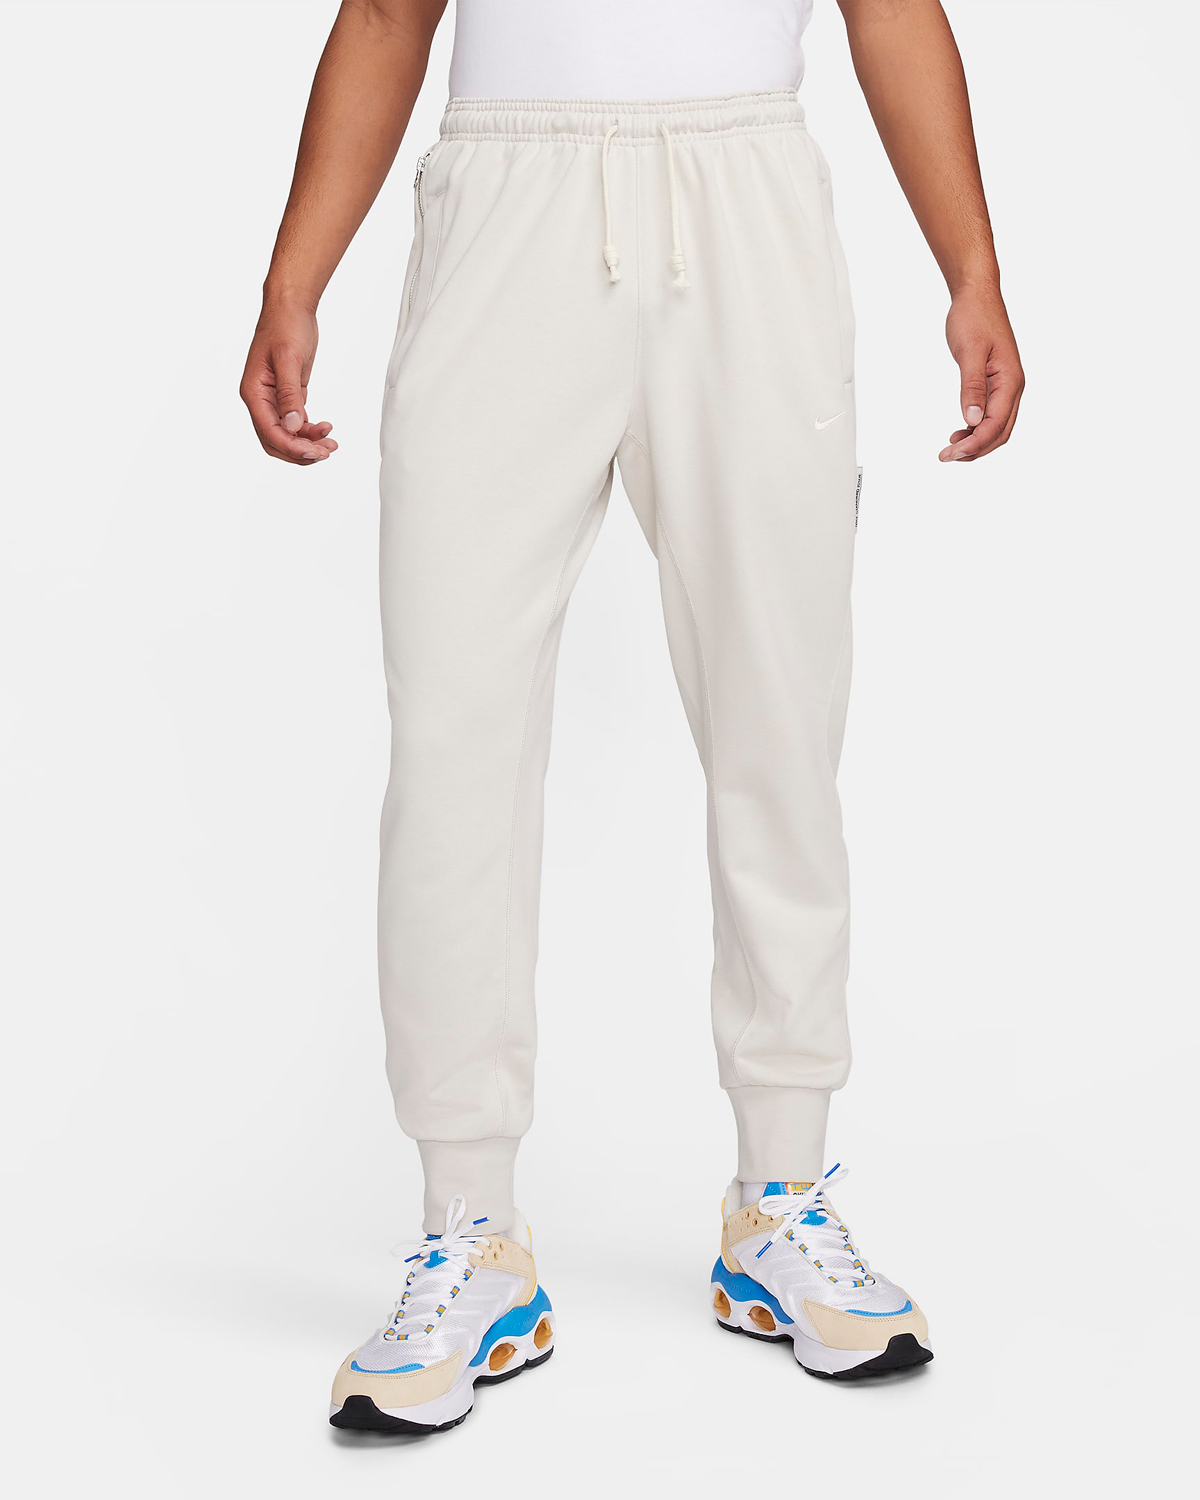 Nike-Standard-Issue-Pants-Light-Orewood-Brown